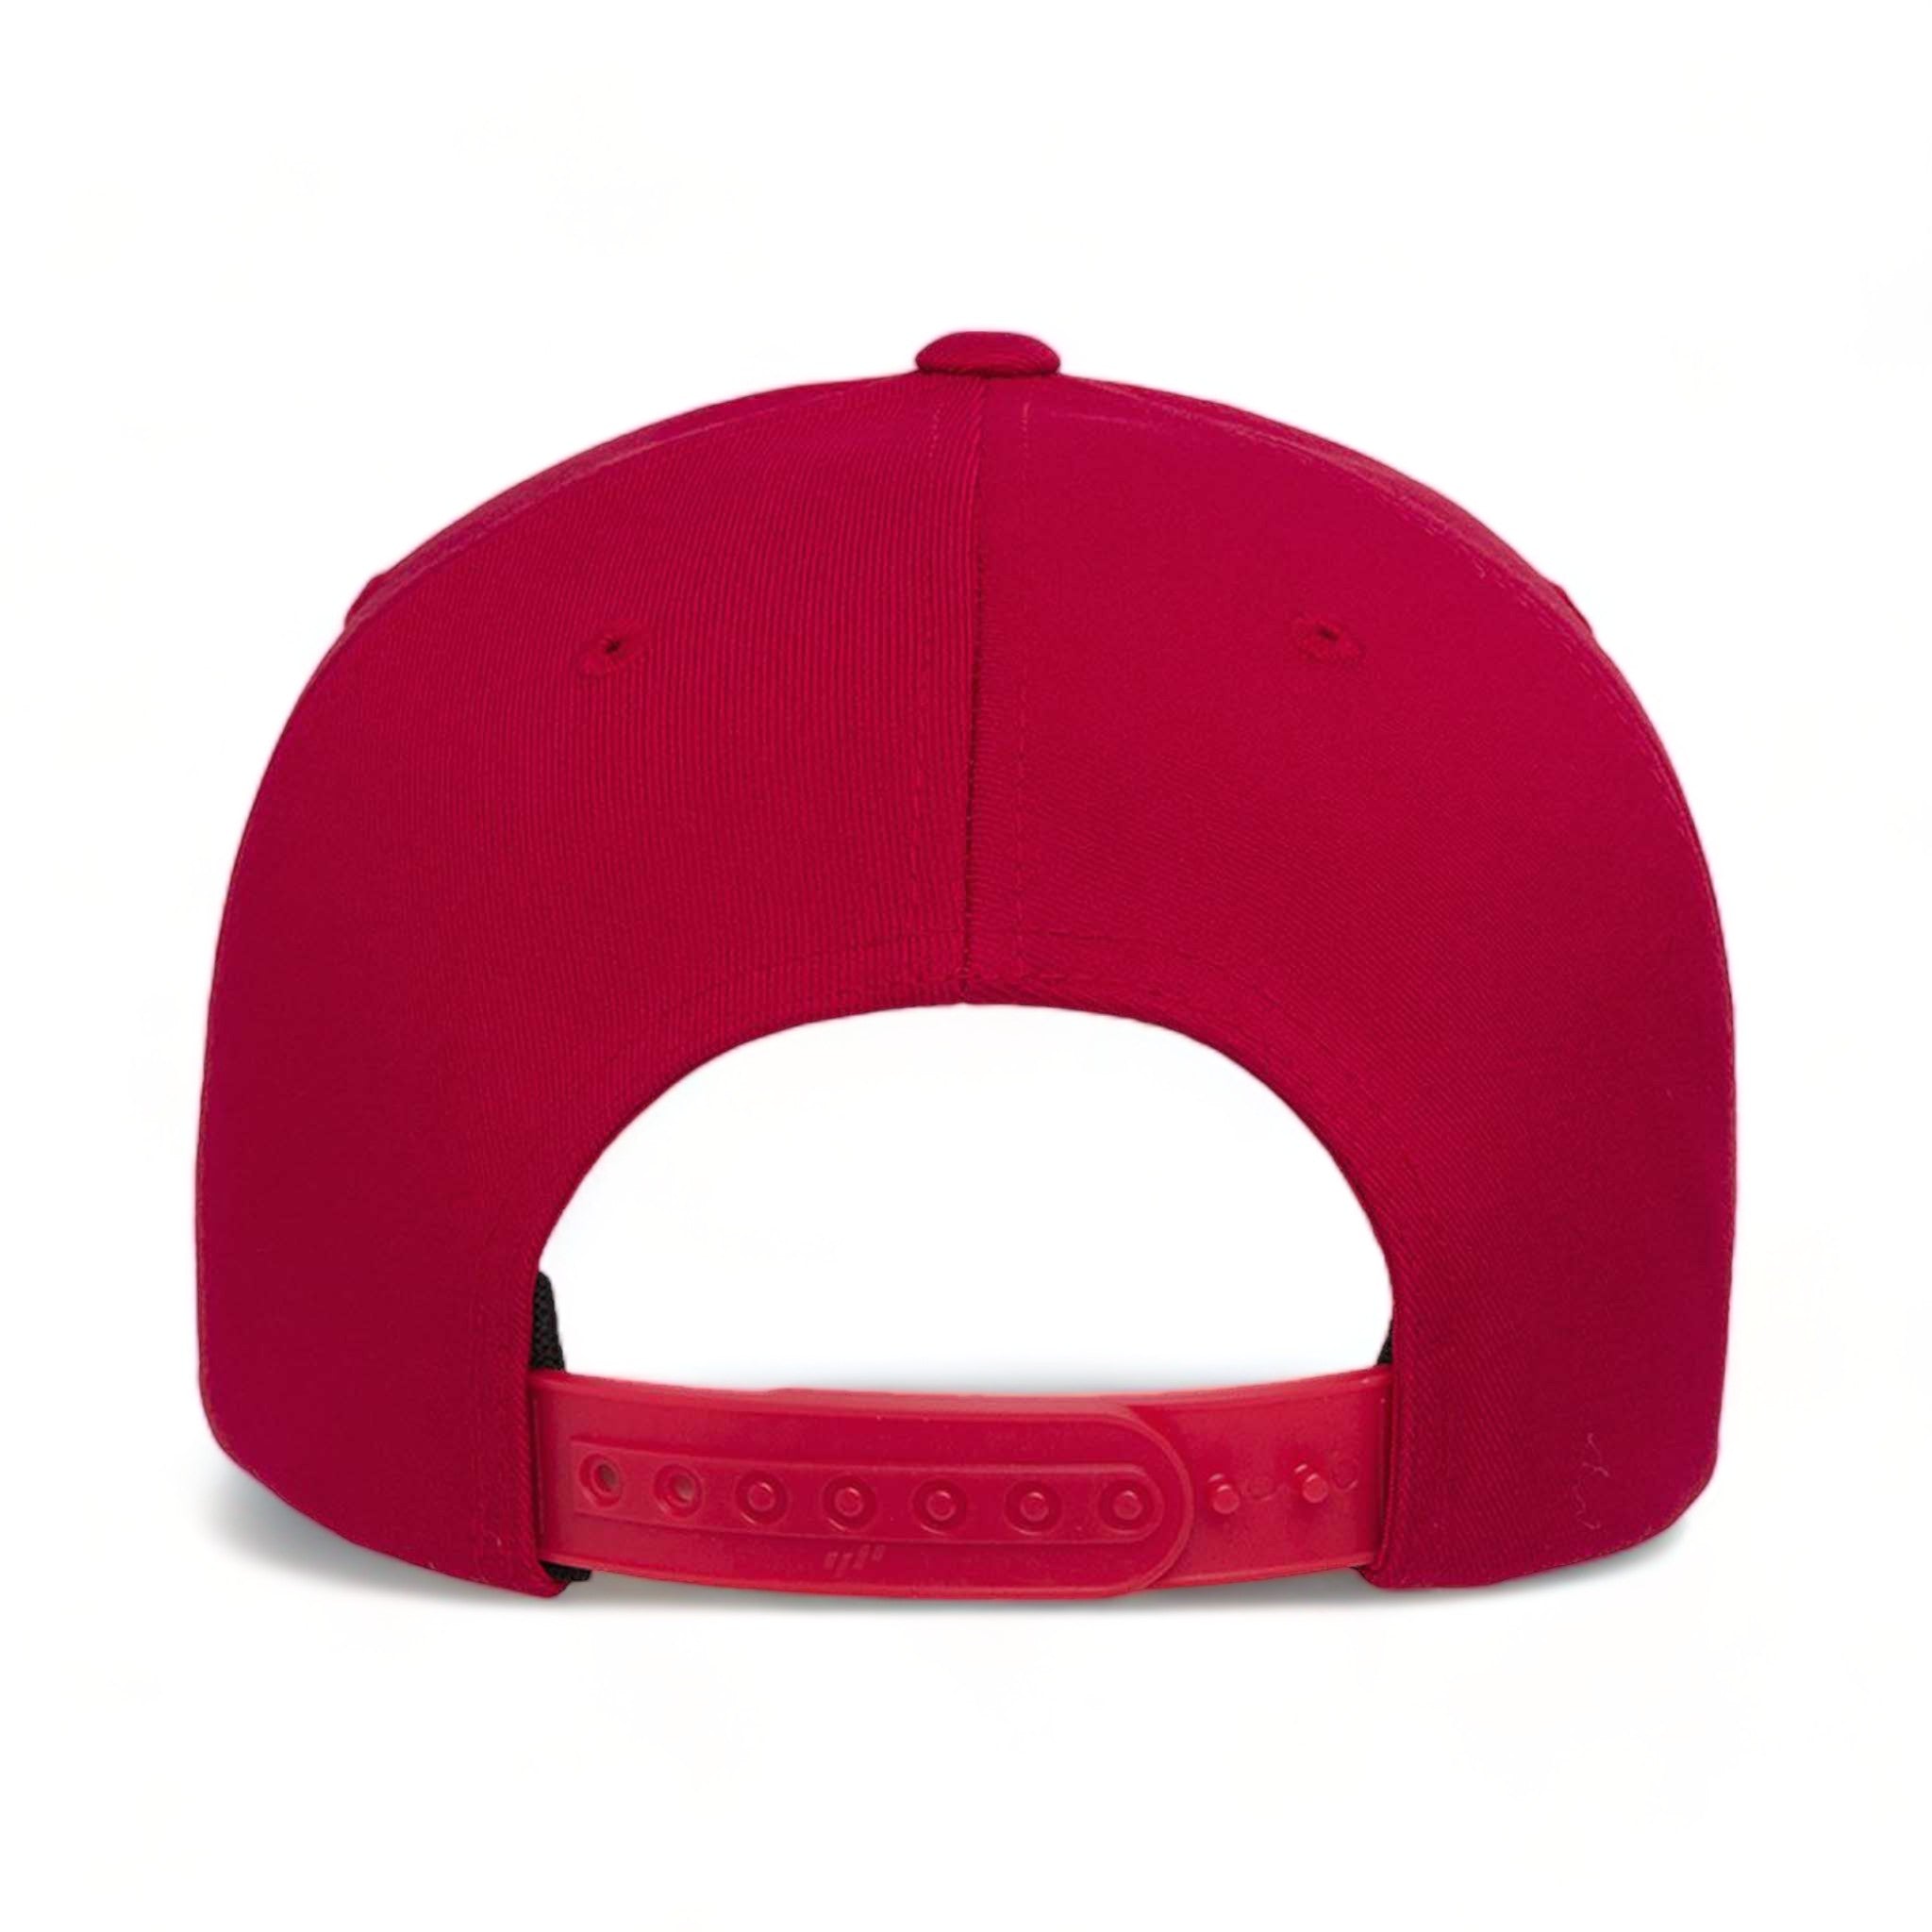 Back view of Flexfit 6110NU custom hat in red